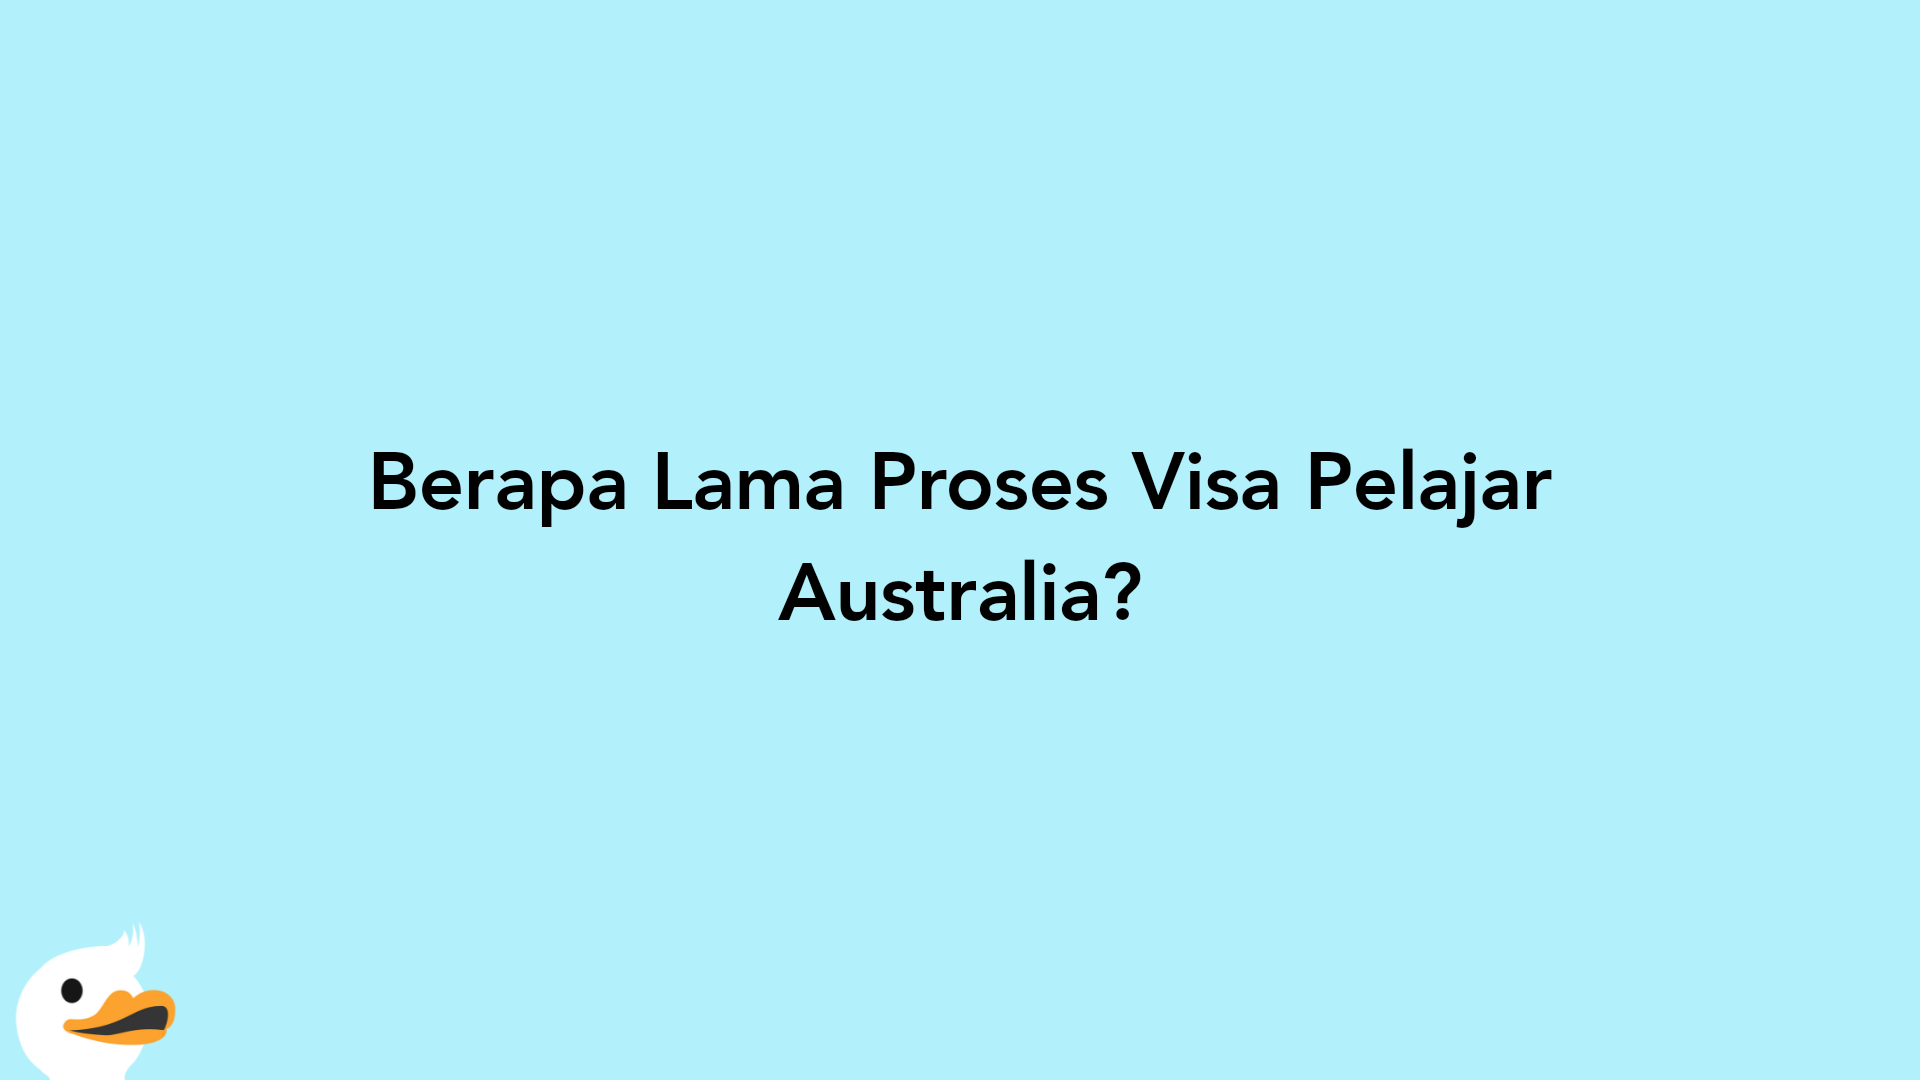 Berapa Lama Proses Visa Pelajar Australia?